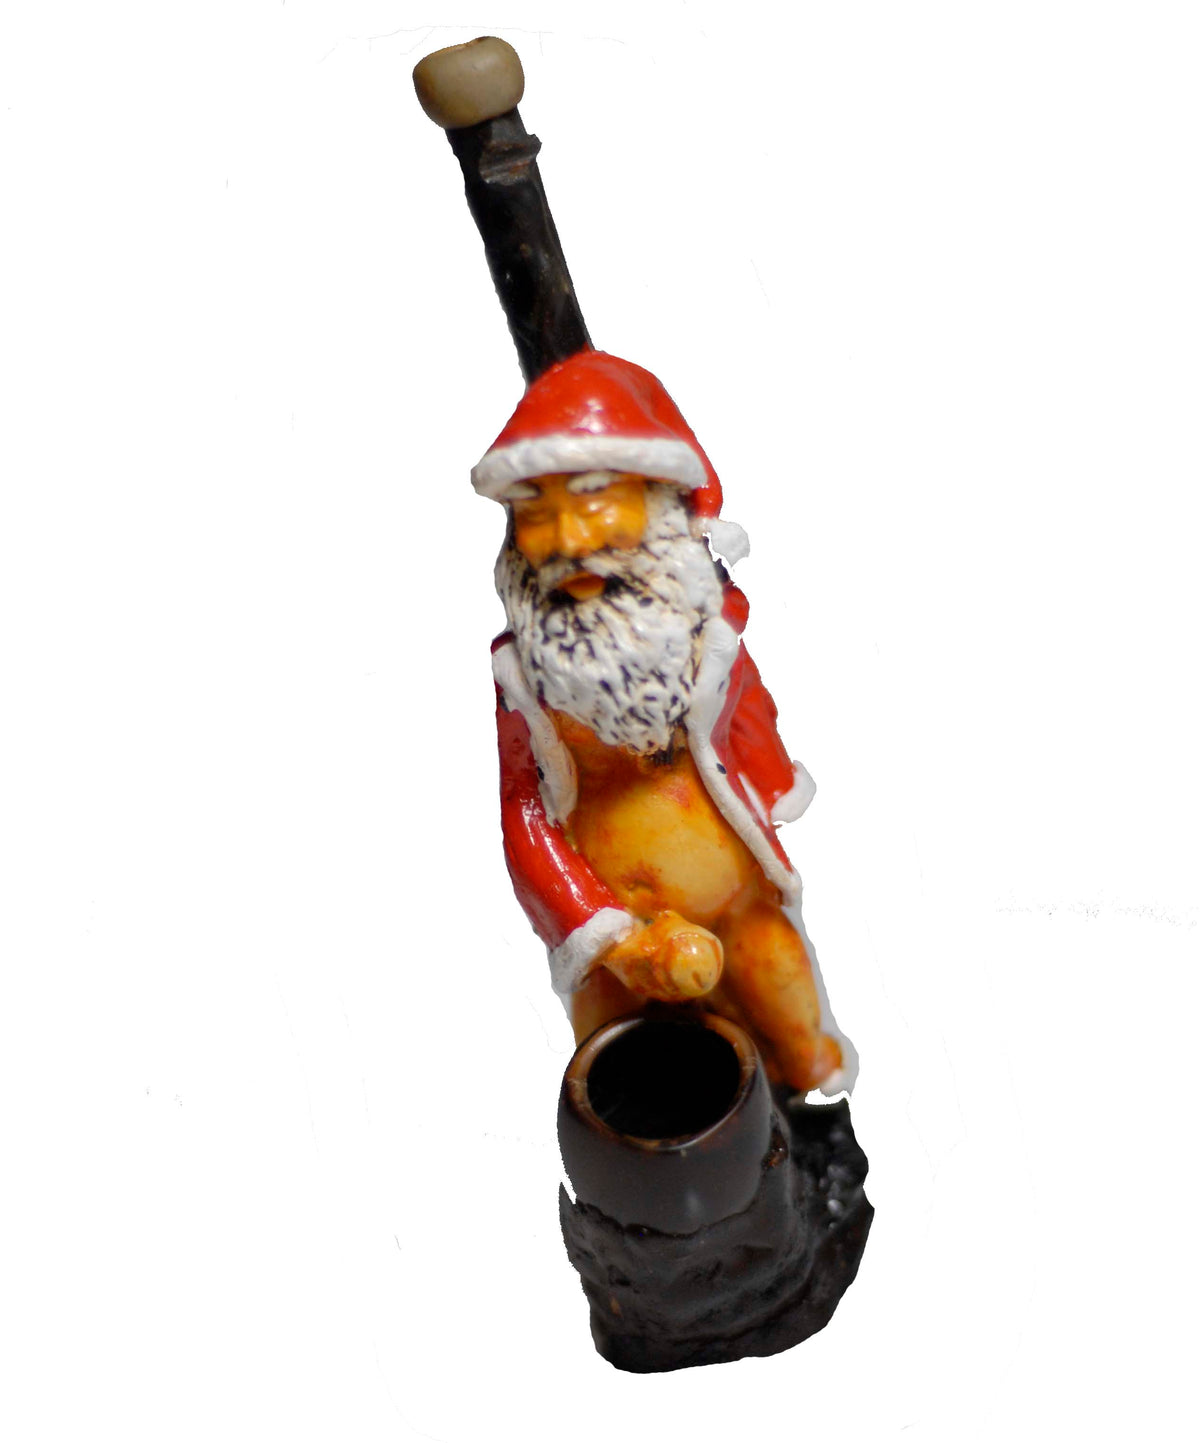 Masturbating Santa Tobacco pipe